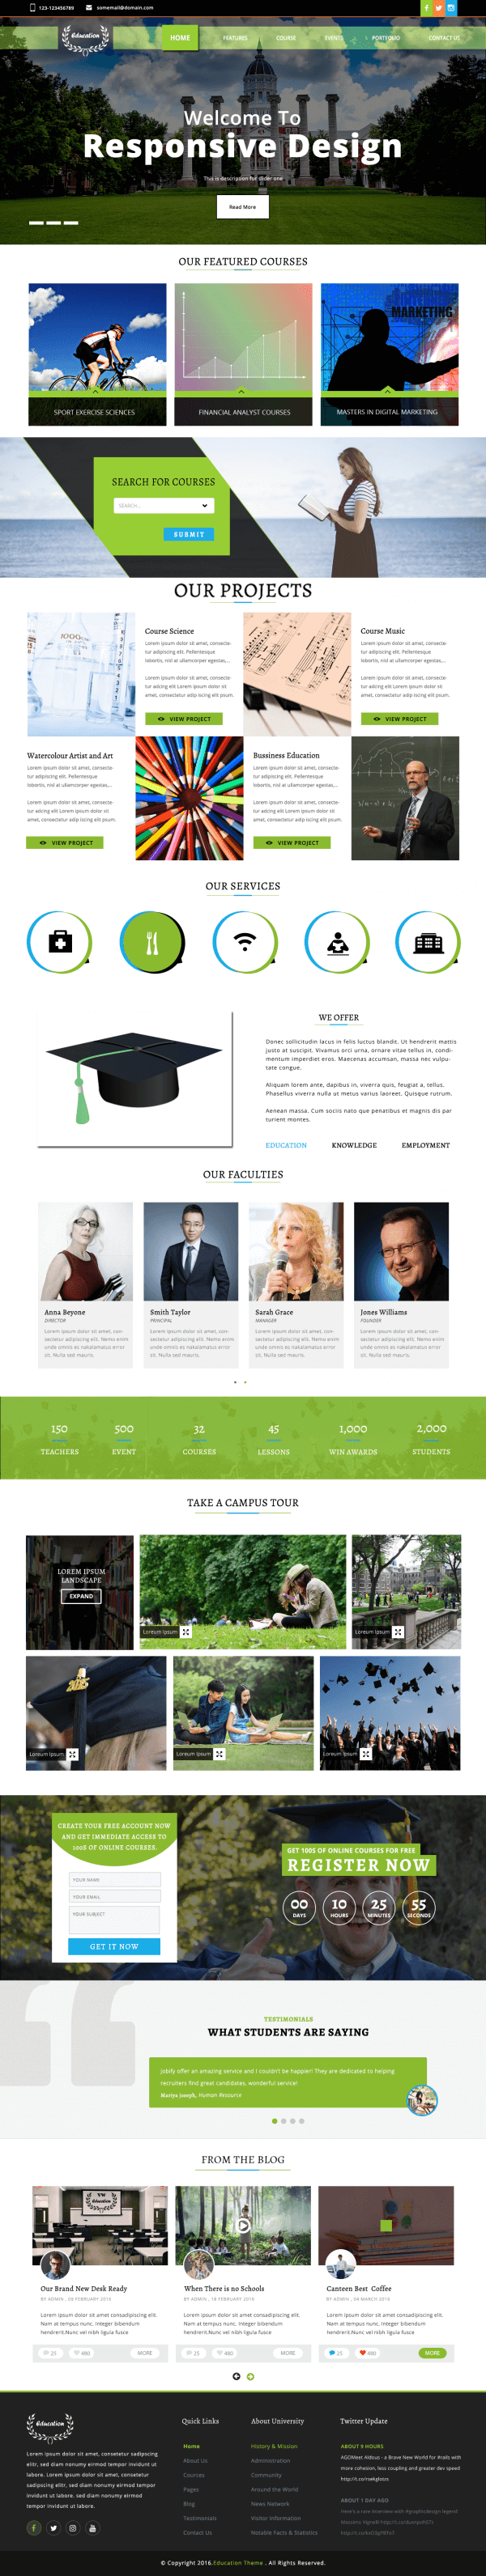 Education-WordPress-theme